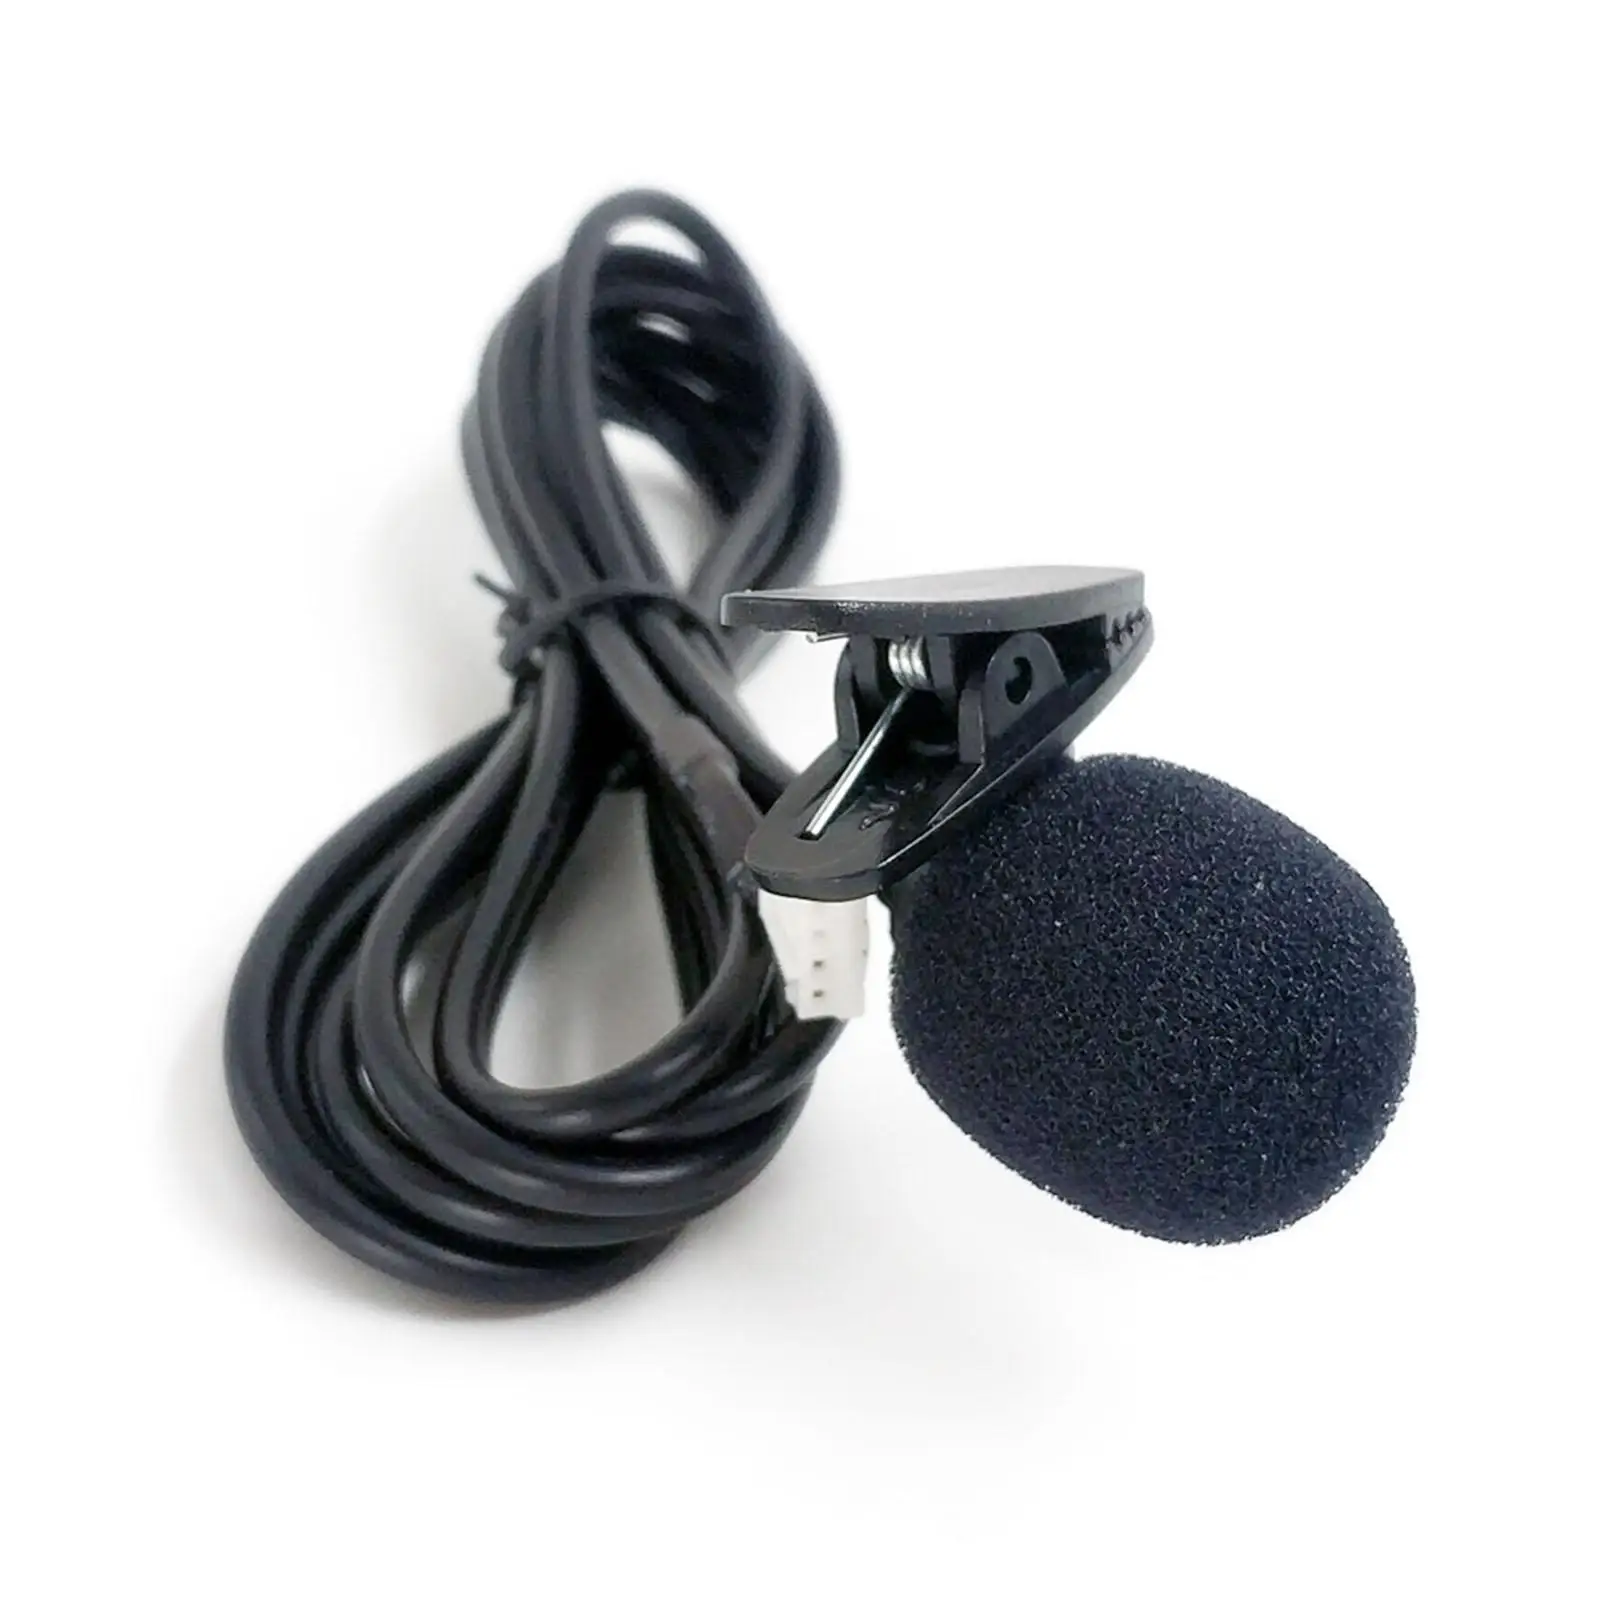 Car AUX Adaptor Cable with Microphone Handsfree Call for E90 E91 E92